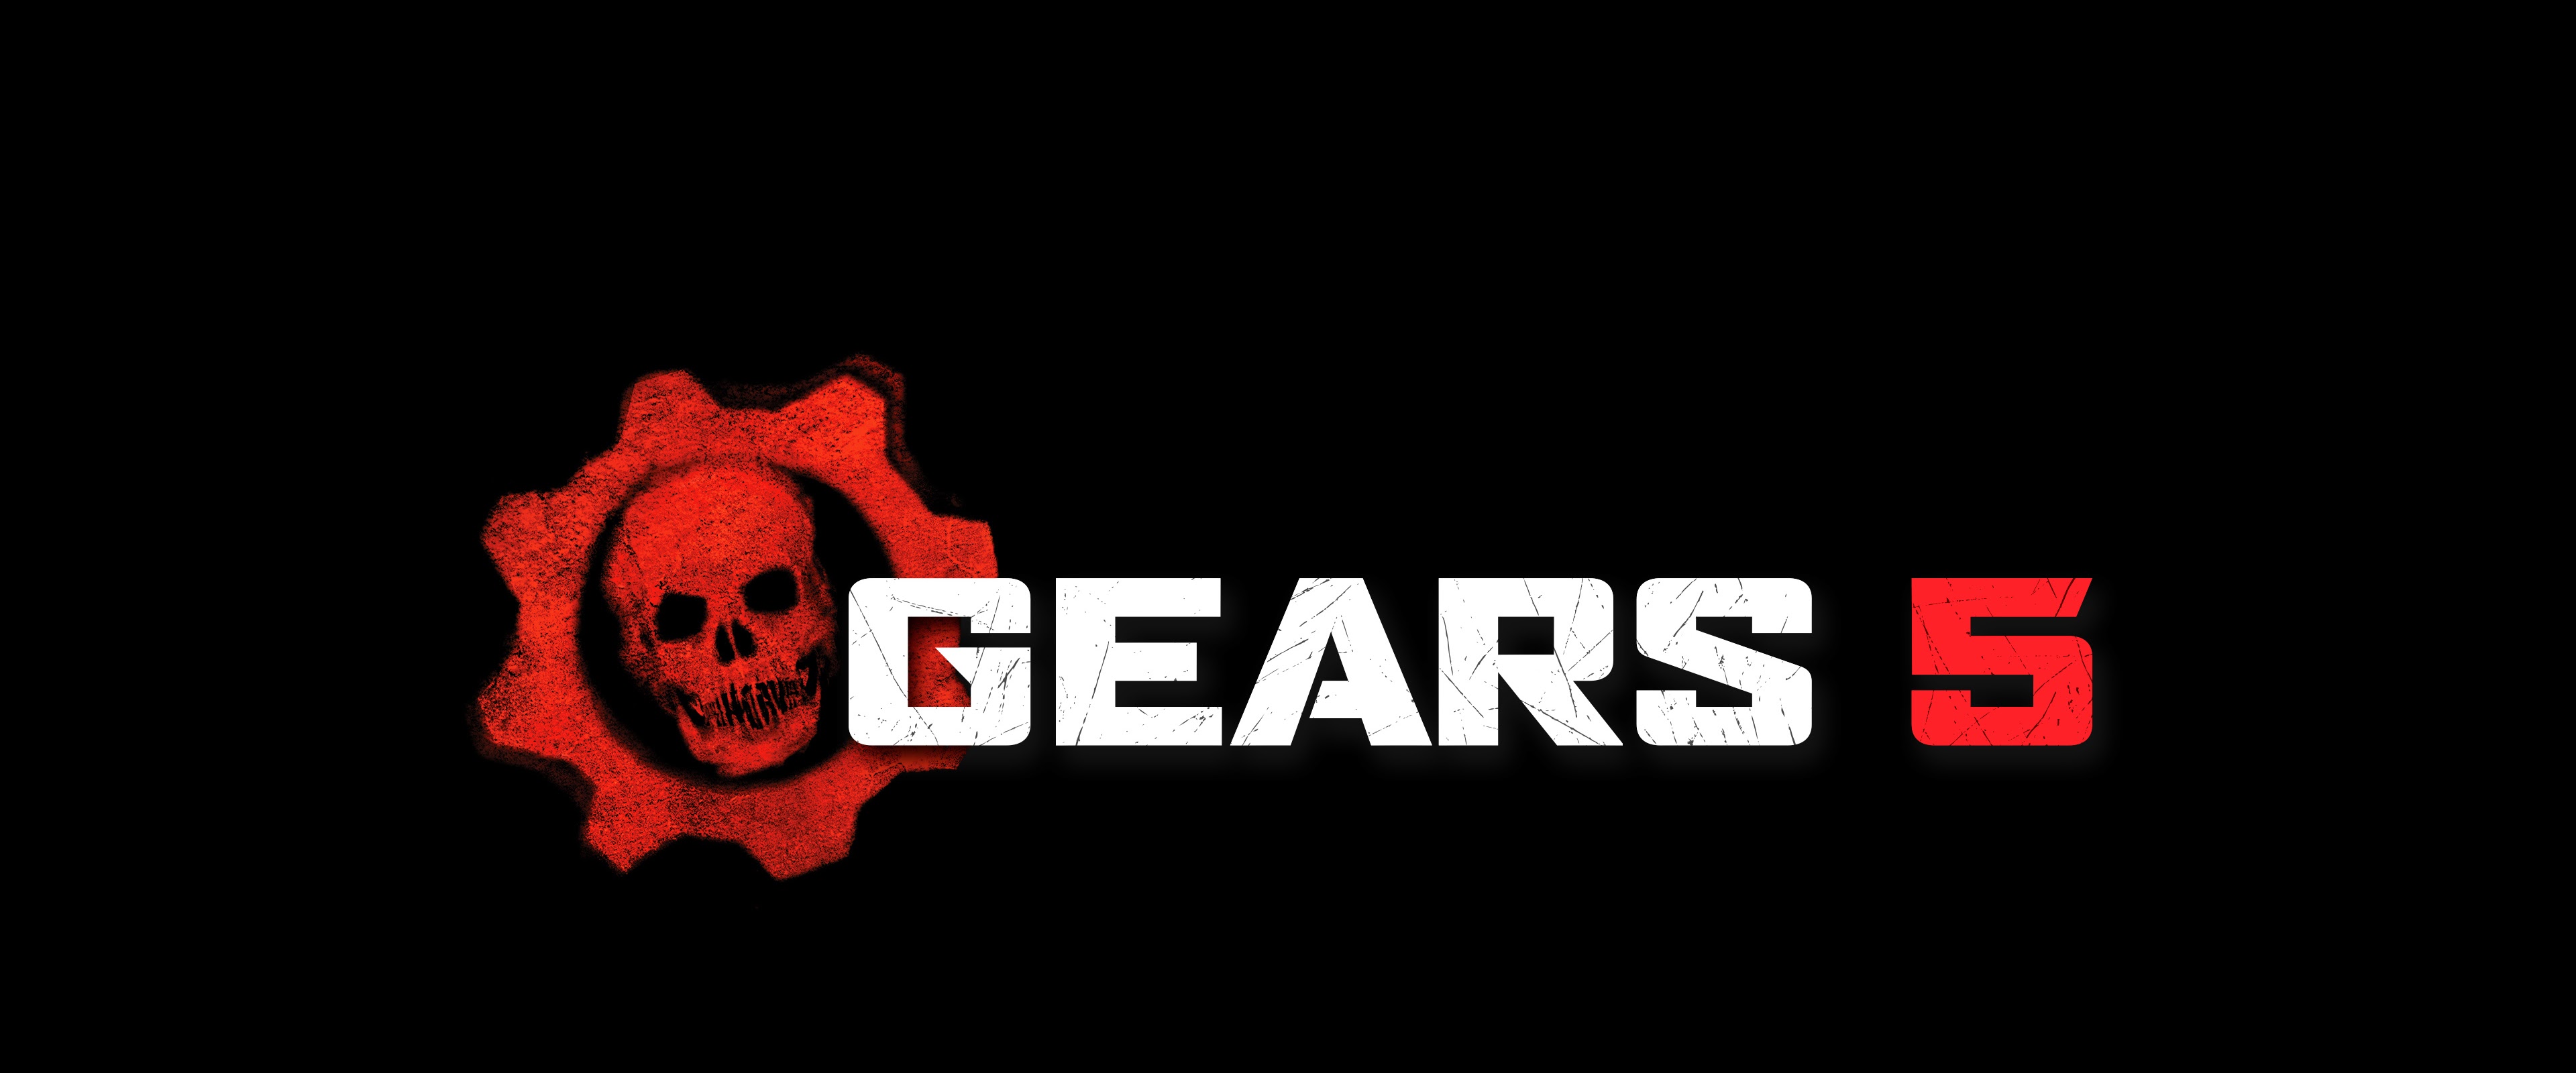 Gears Of War Logo Wallpapers